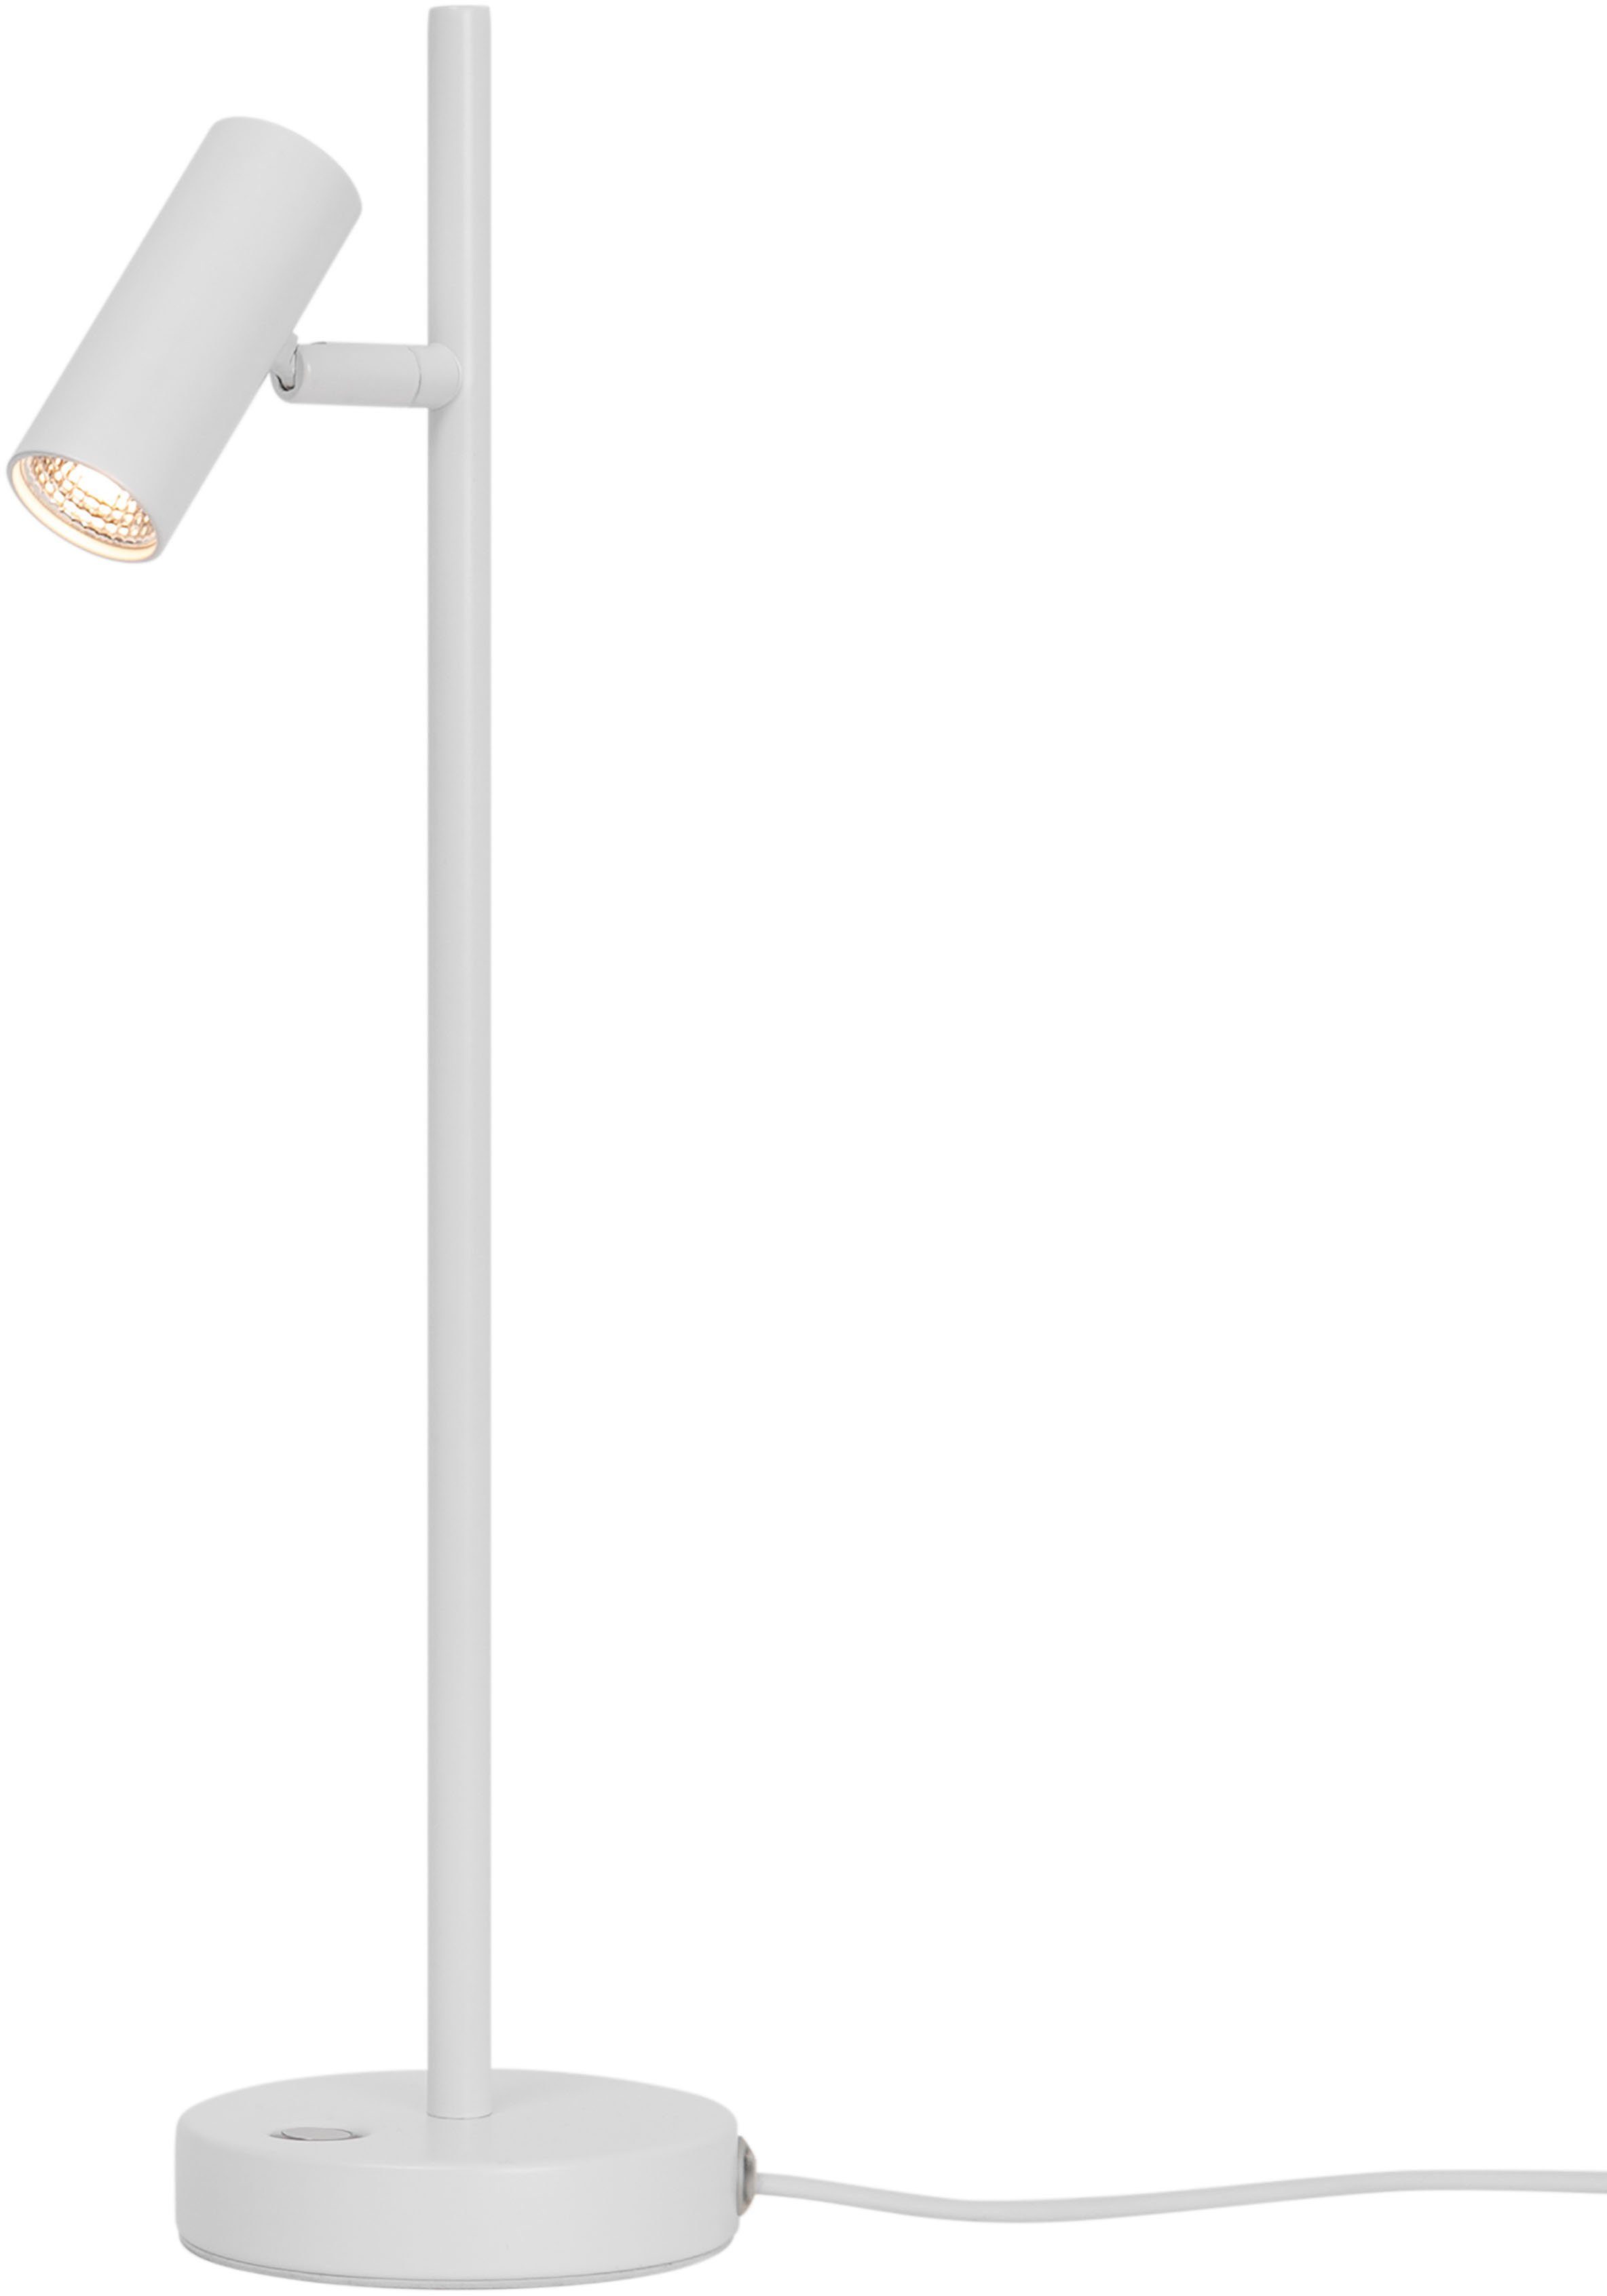 der OMARI, Nordlux integriert, Lebensdauer lange Tischleuchte LED LED LED fest mit